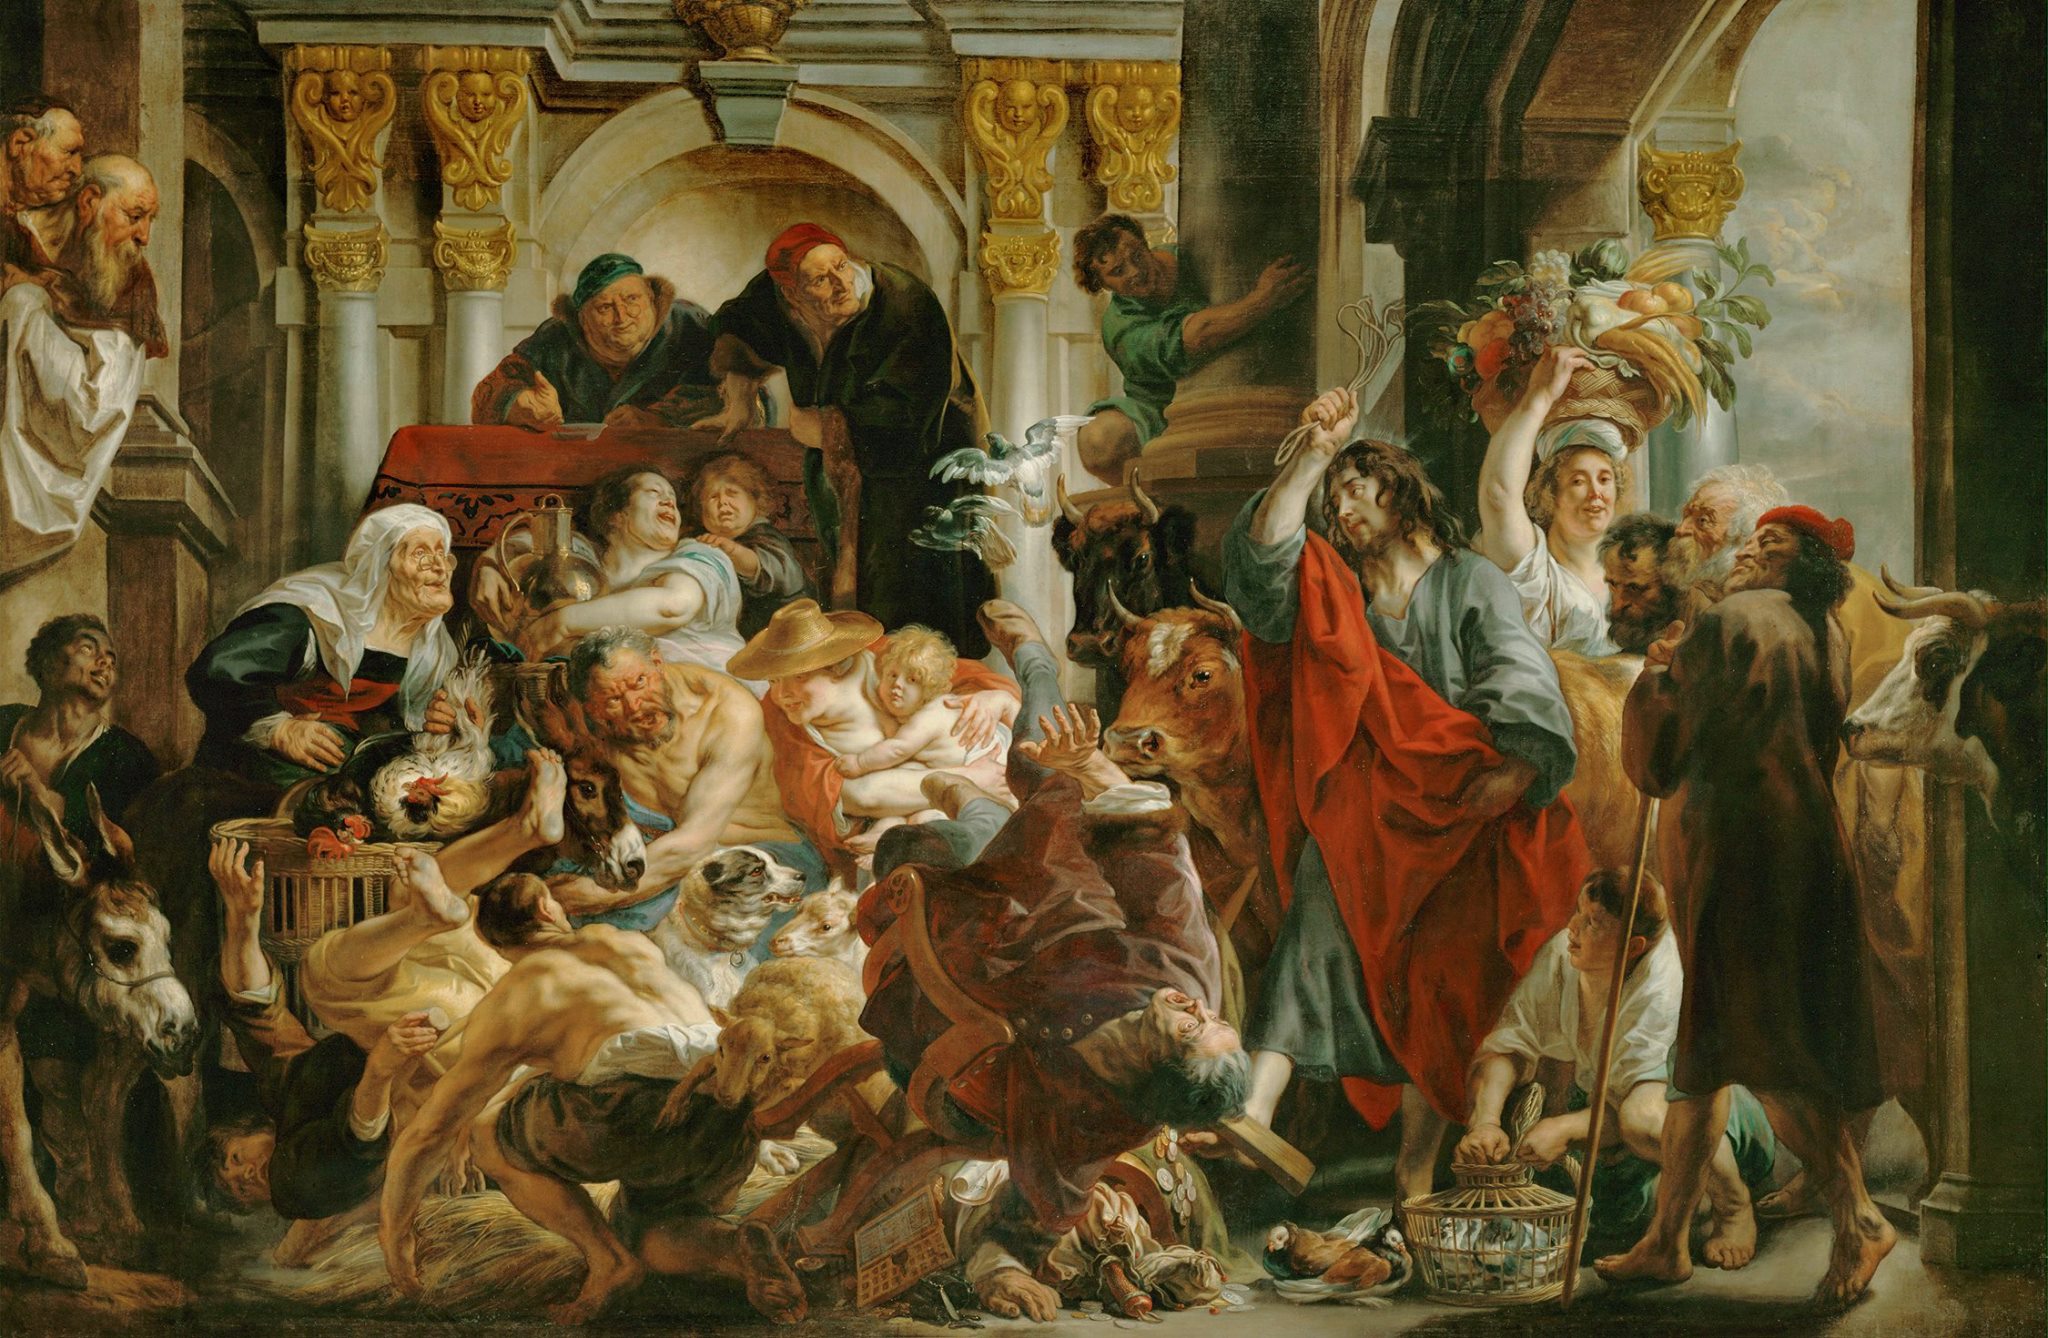 Who was Pieter Paul Rubens